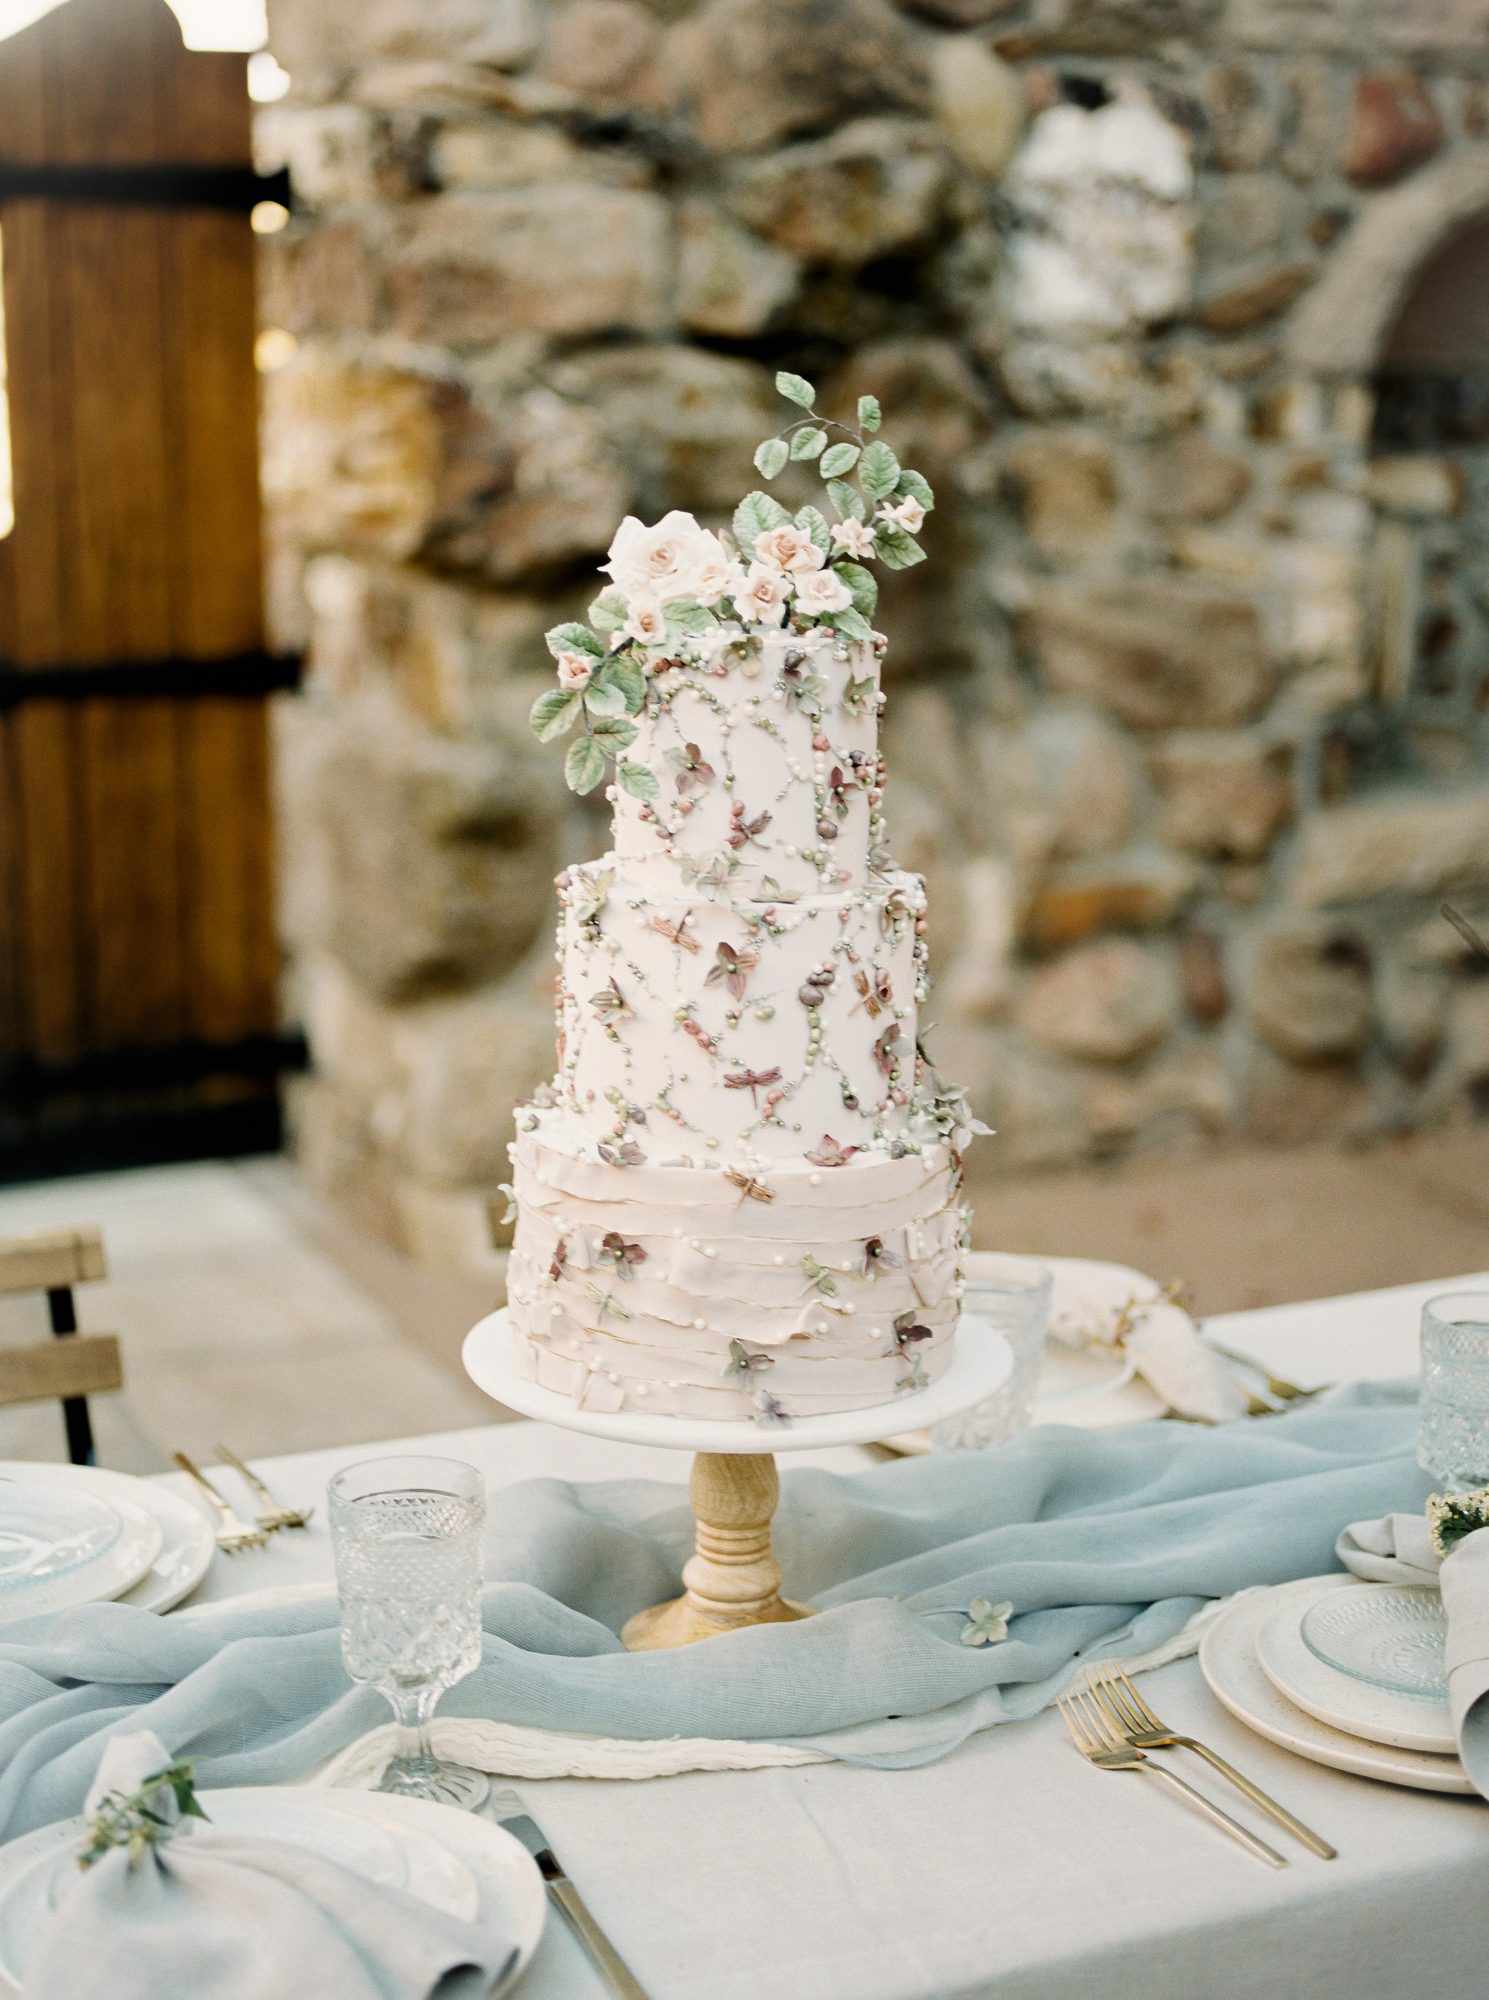 floral wedding cakes sara corona bohemian glamorous whimsical